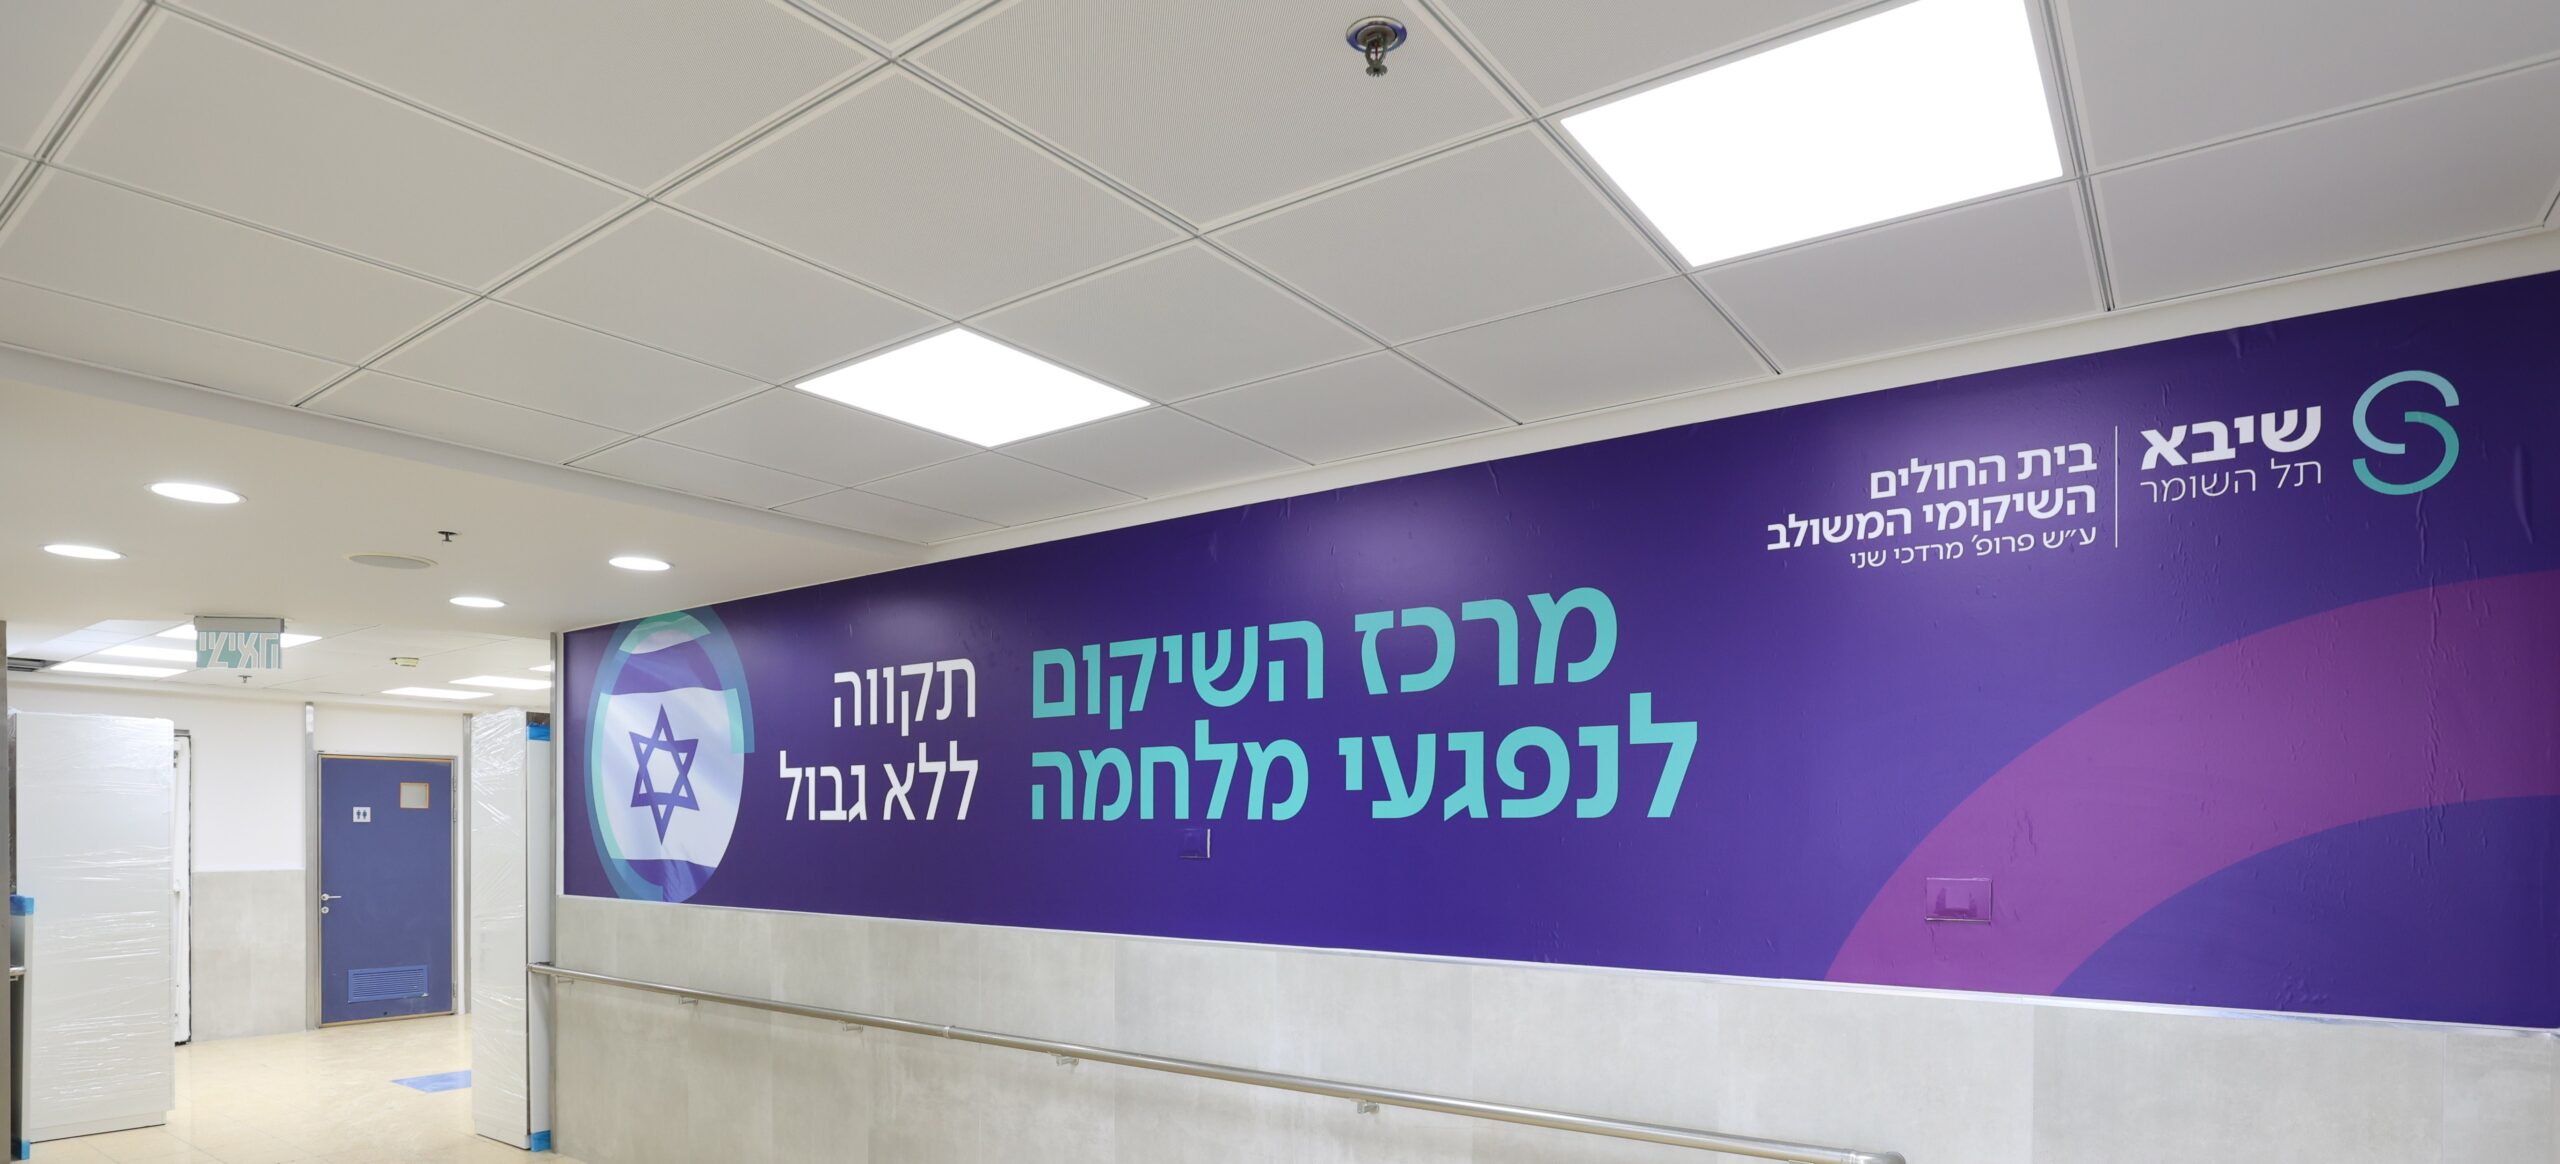 A banner at the Sheba Medical Center with Hebrew writing: "Sheba Tel Hashomer Integrated Rehabilitation Hospital Ayesh Prof. Mordechai Shani Rehabilitation Center for War Victims. Boundless"